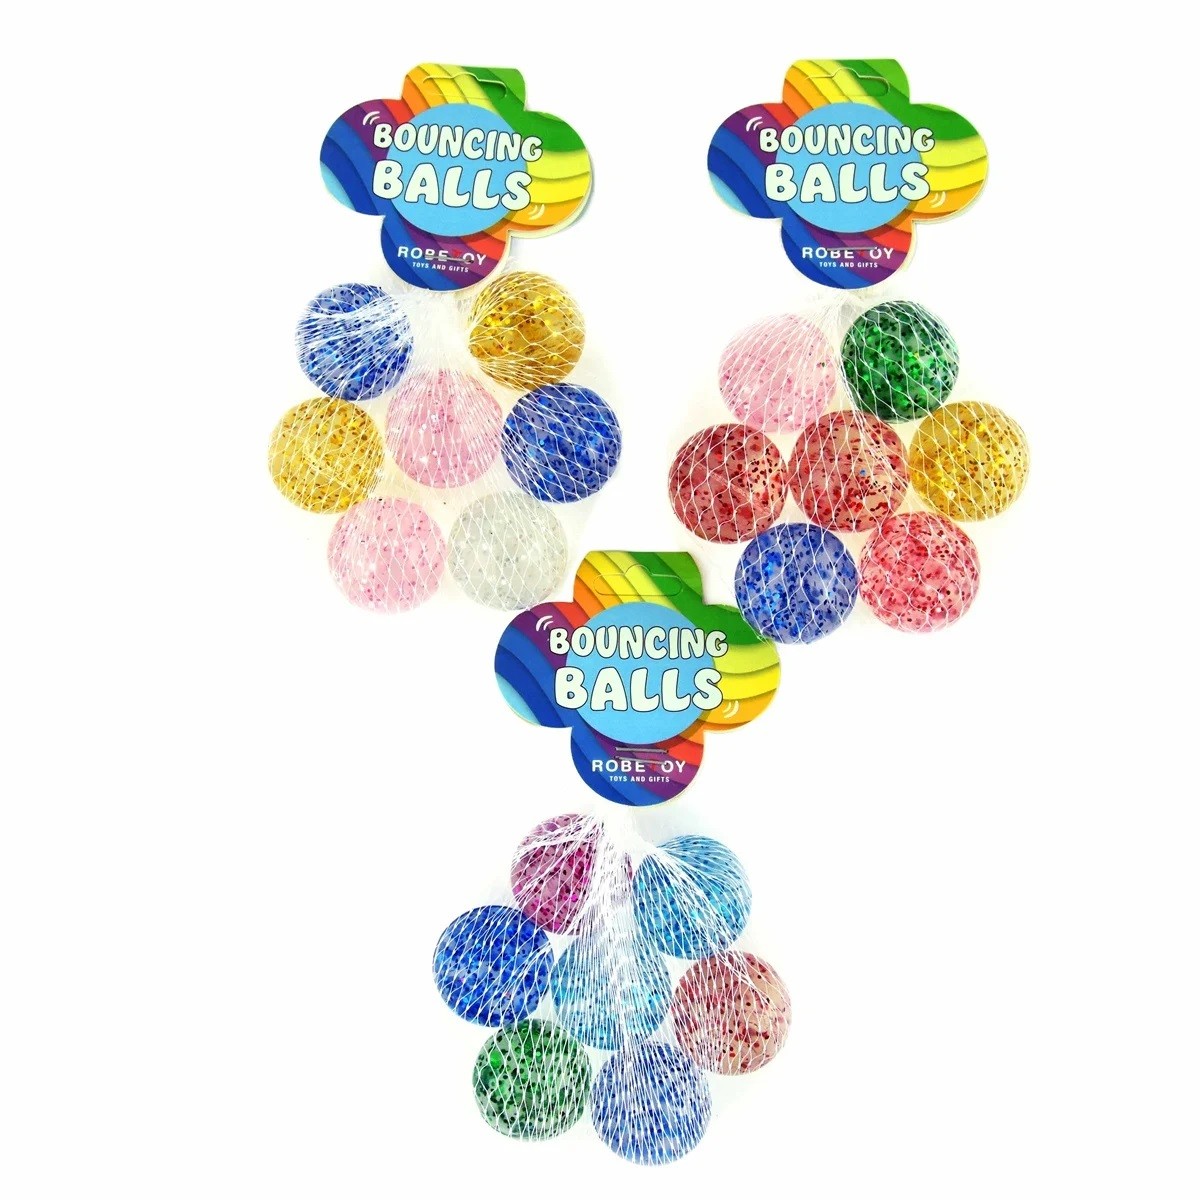 Glitter Studsboll i Nät 7-pack  - Bouncing ball glitter